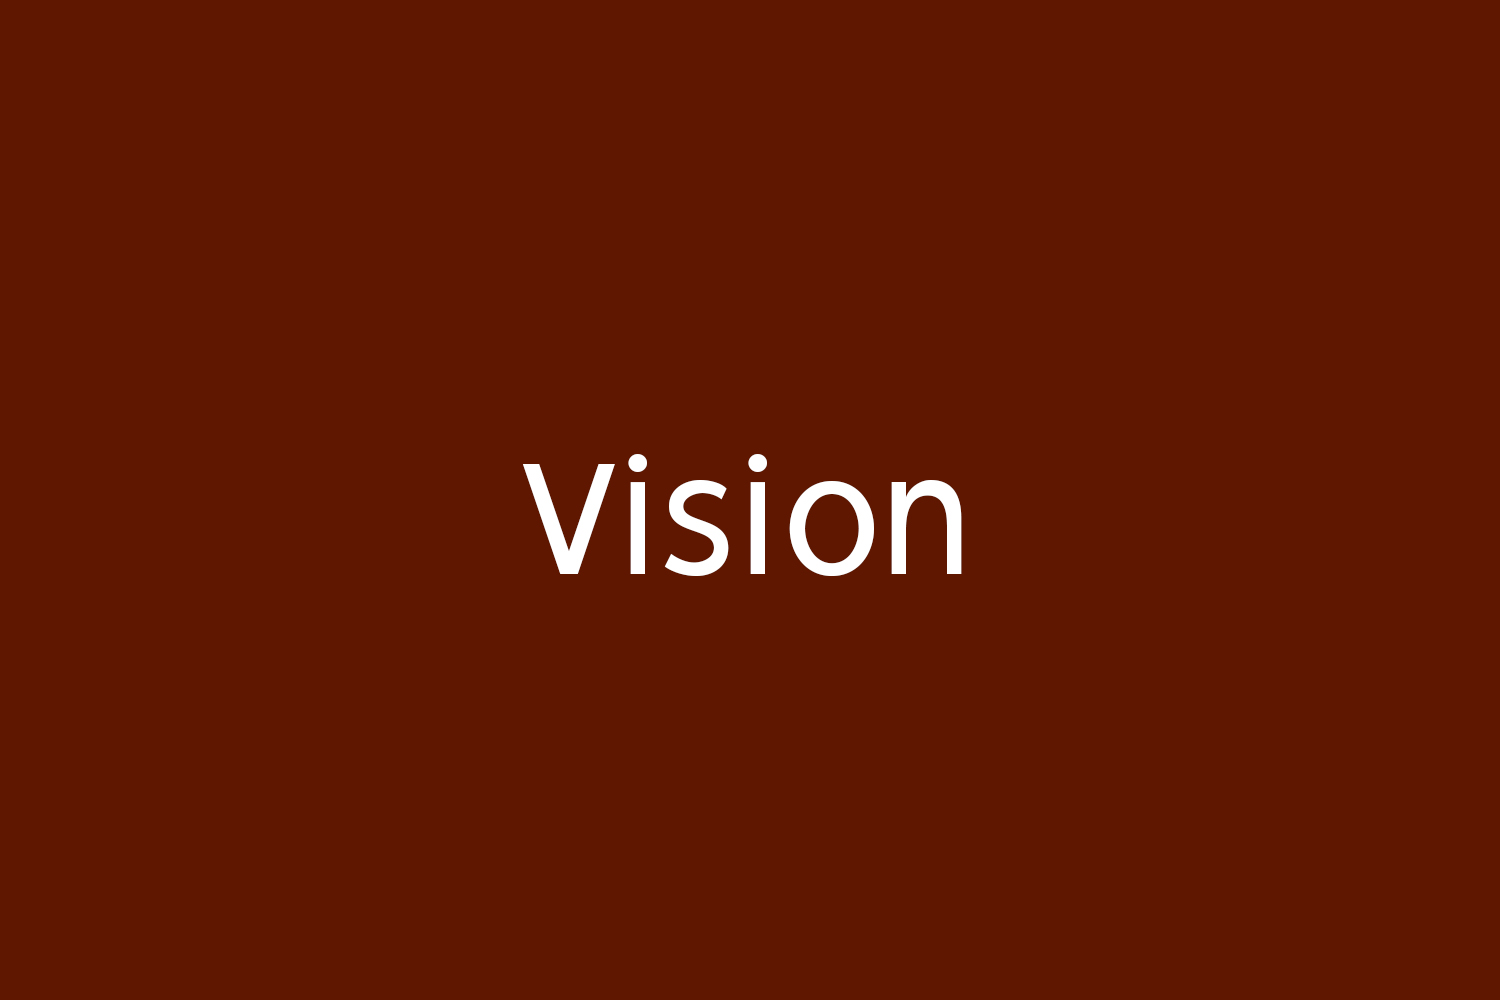 Vision Board Font